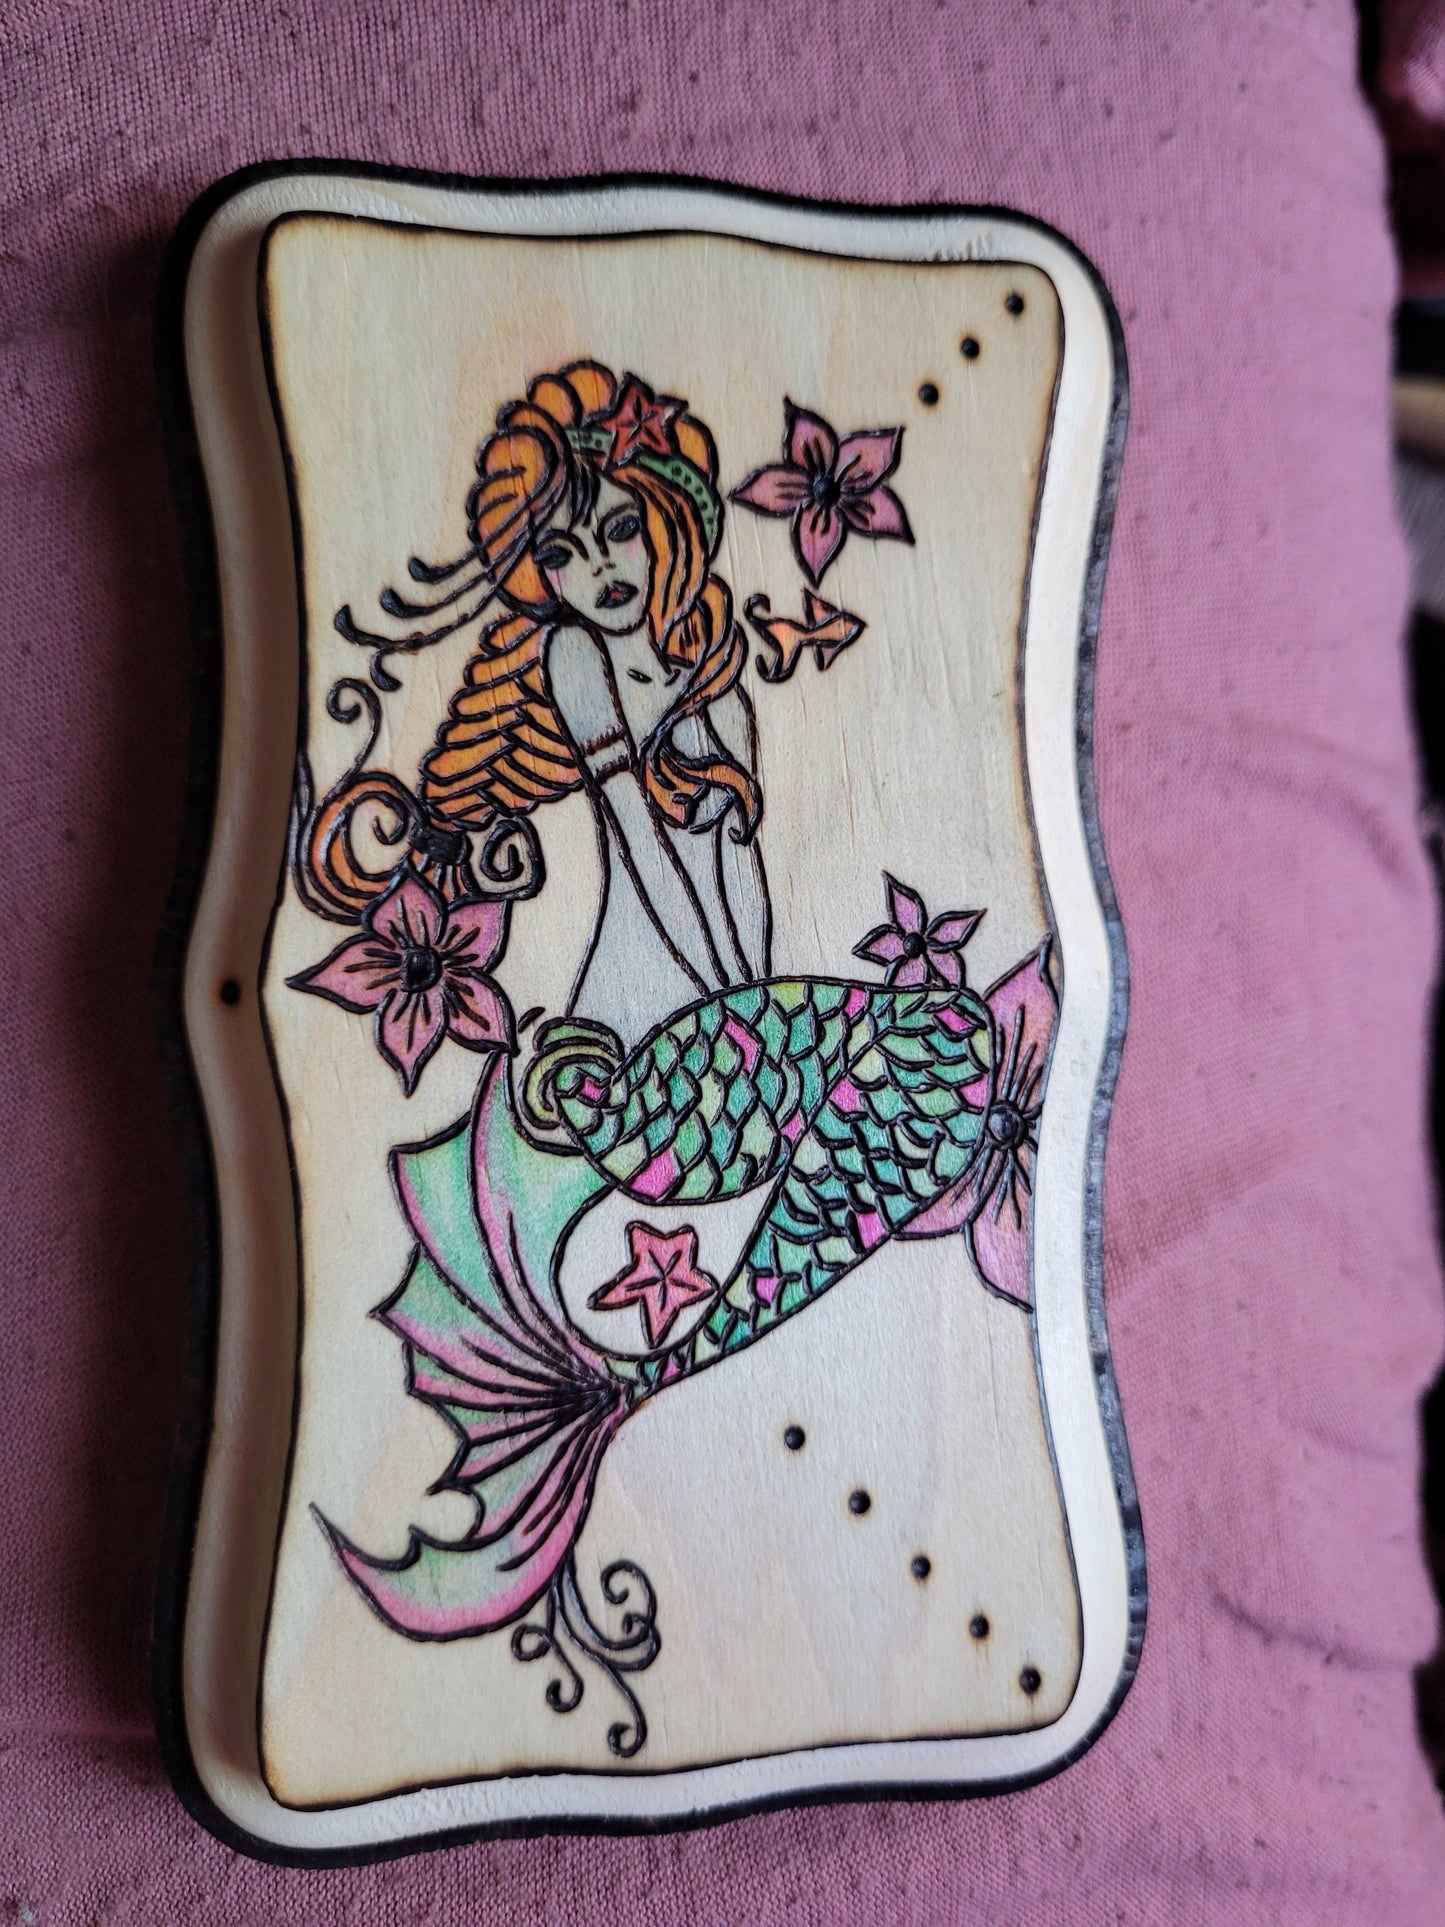 A Mermaid - 'Pyrographics by The Ragdoll Princess'